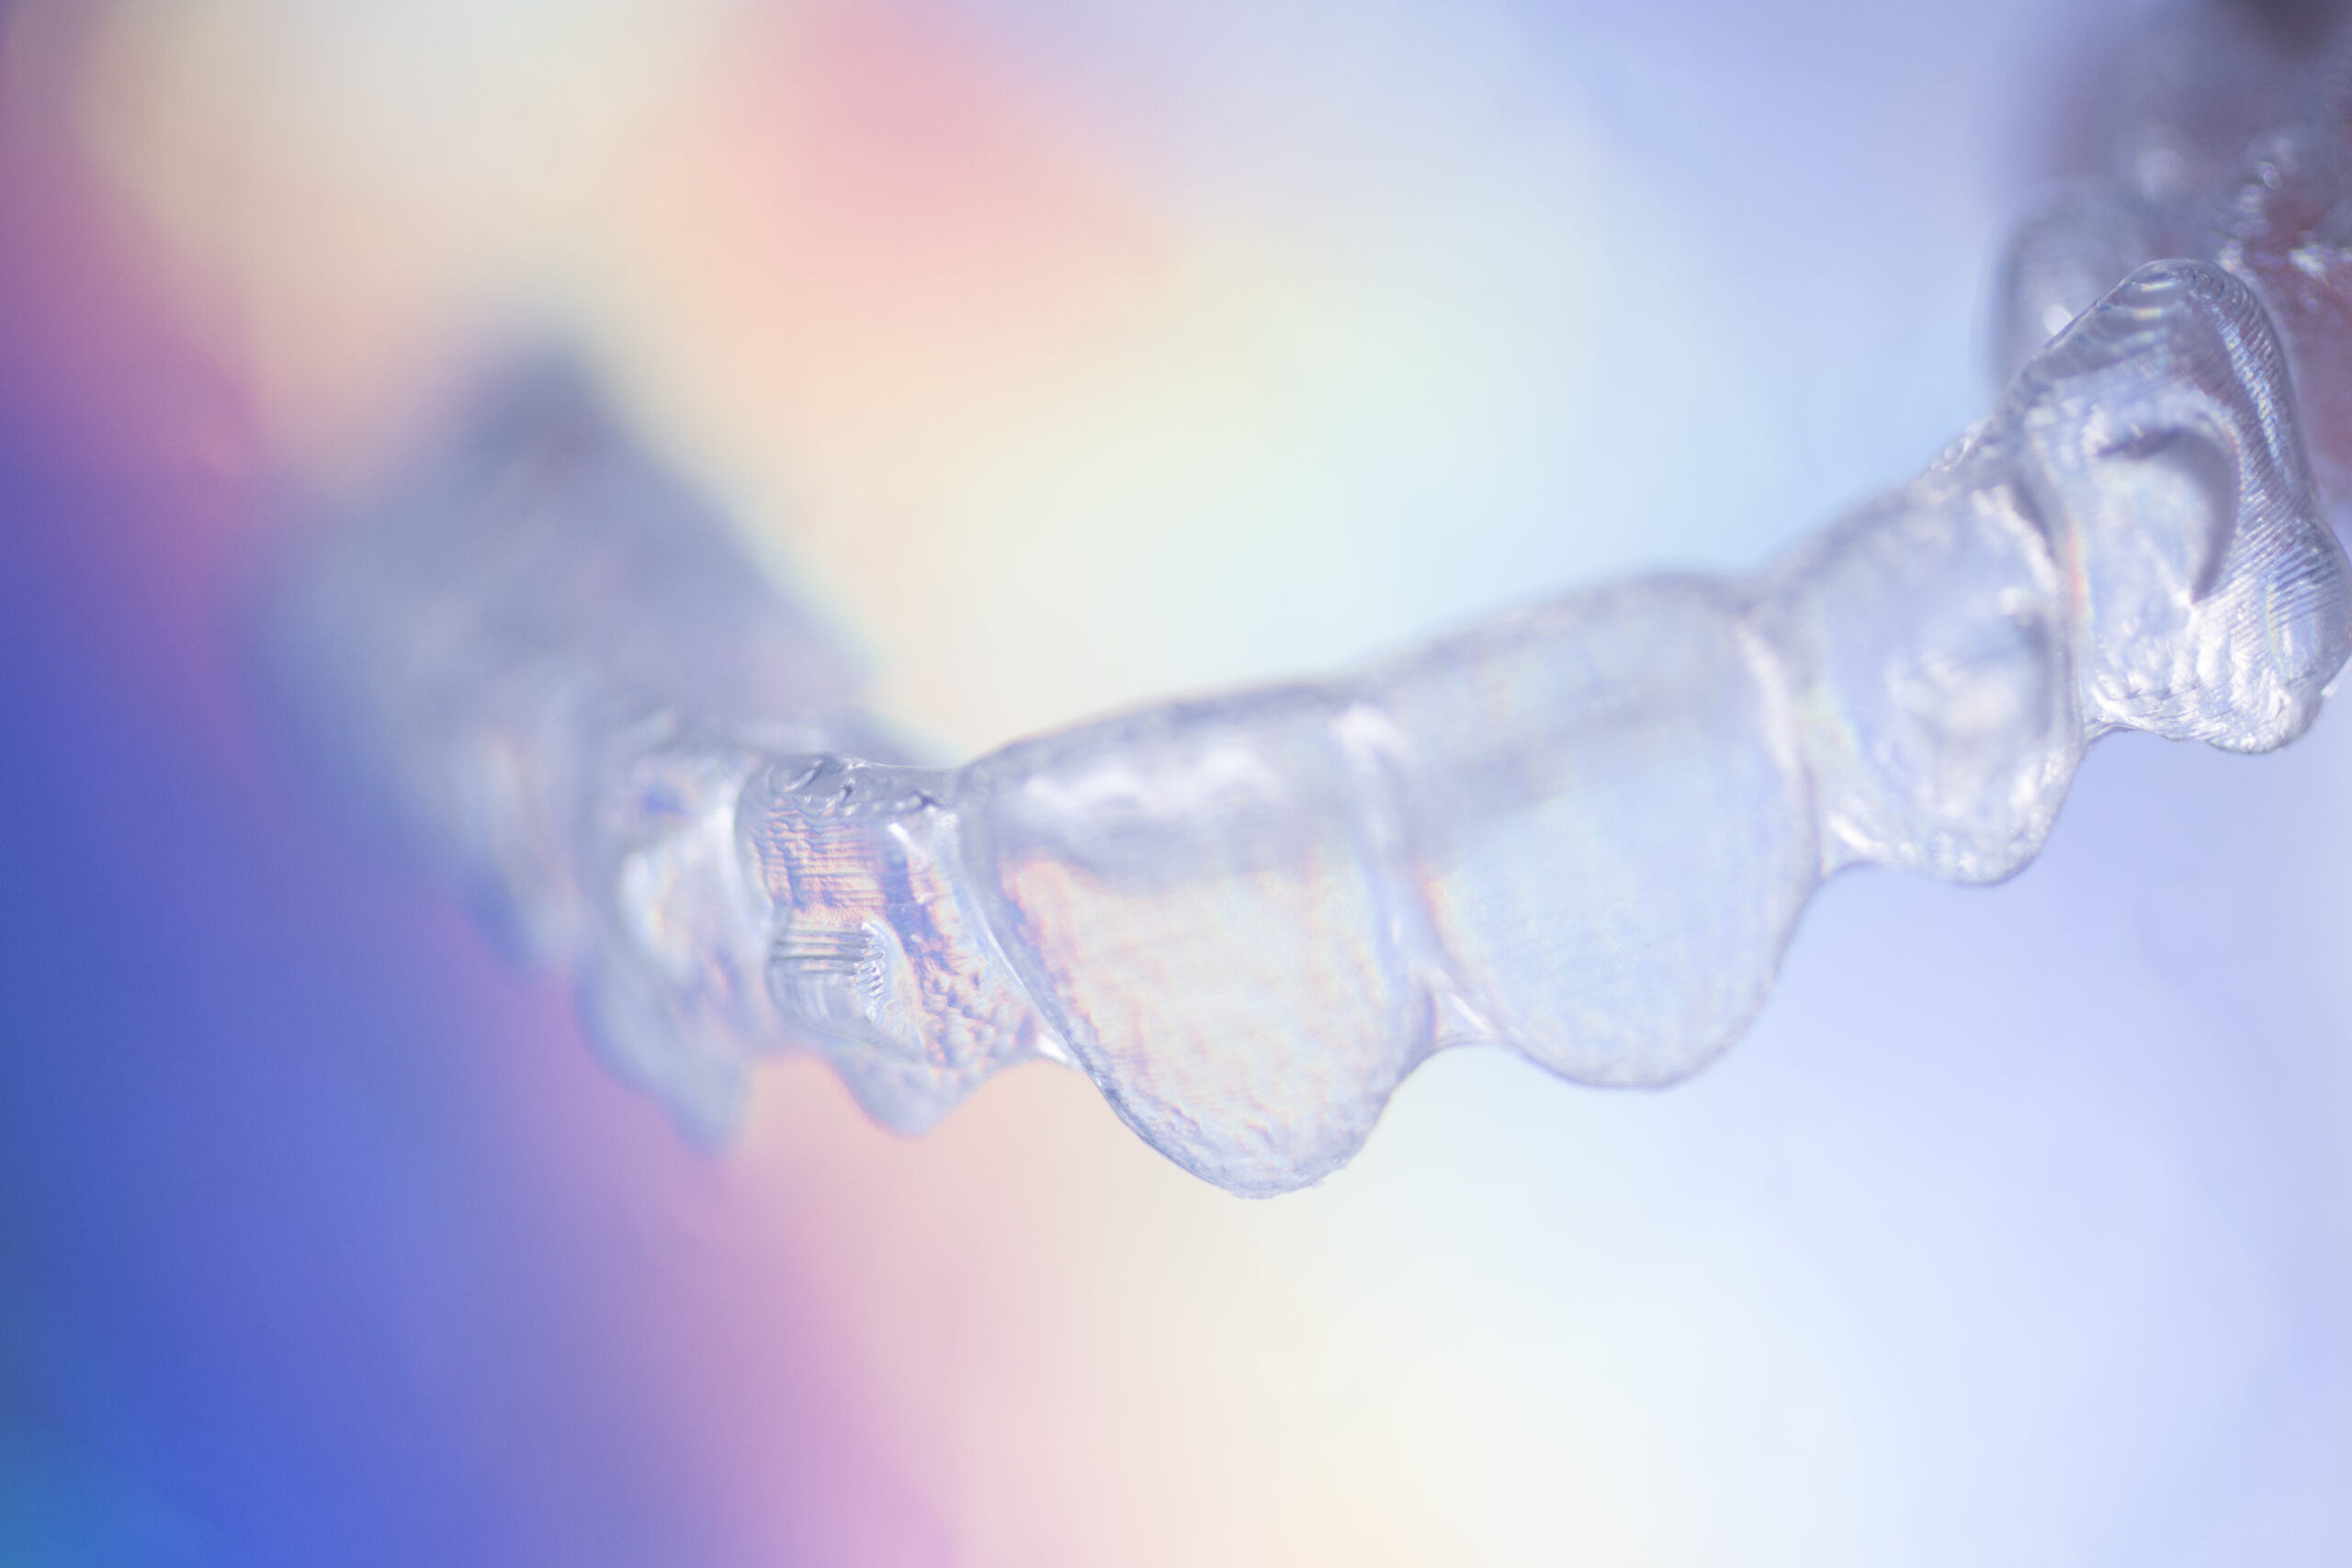 Invisible modern plastic aesthtic dentistry dental brackets teeth aligner straighteners.